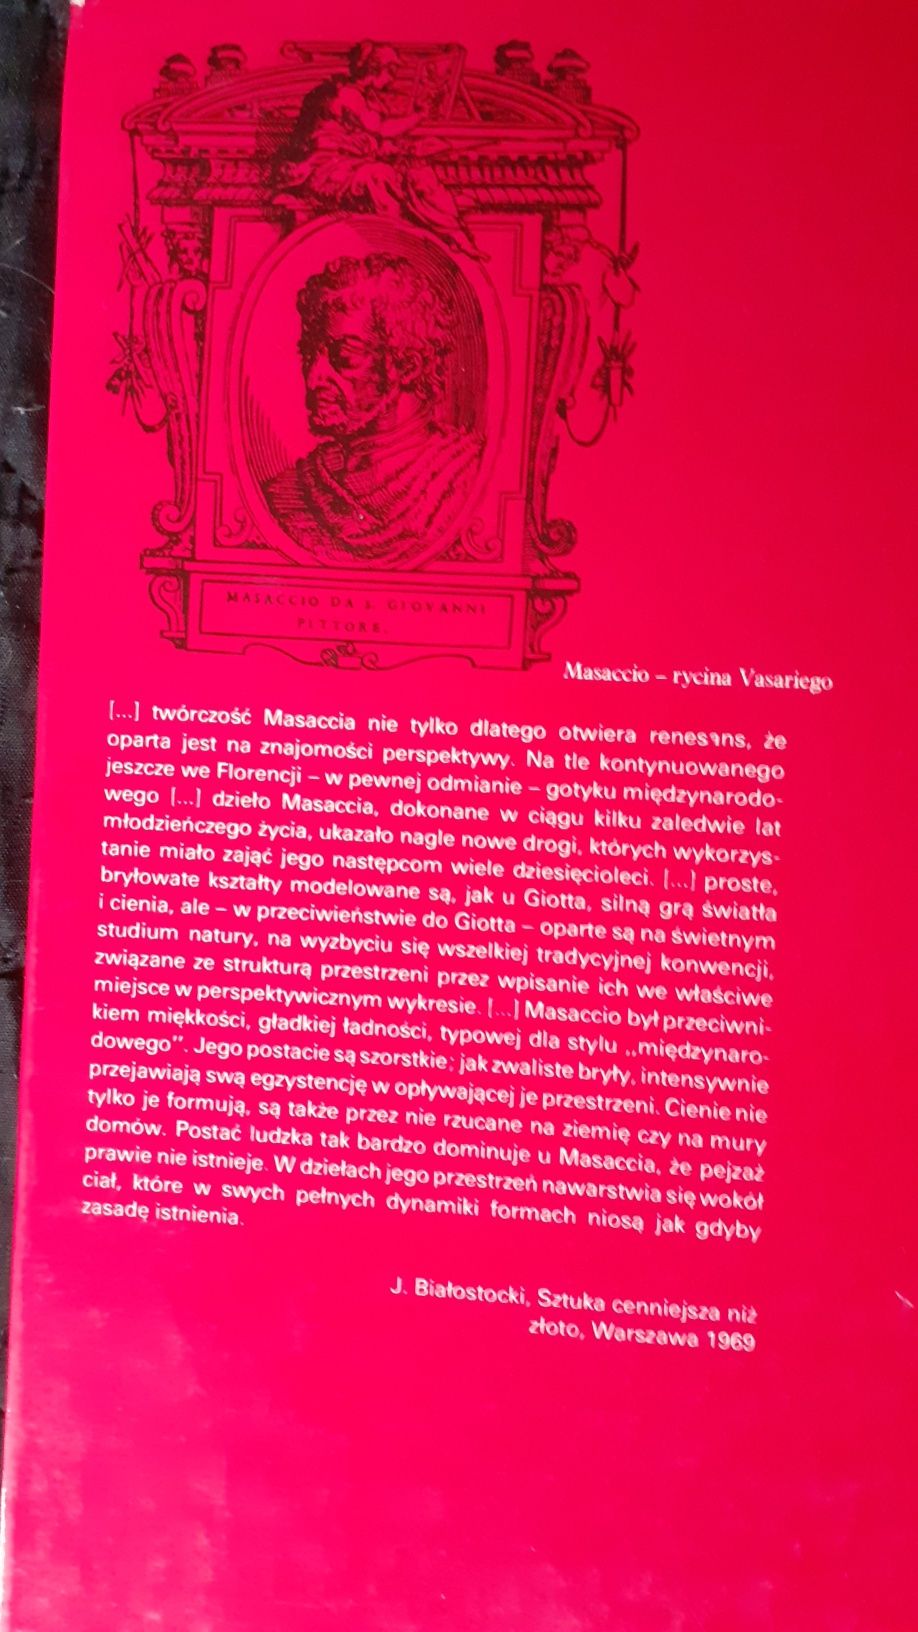 Masaccio Arkady sztuki album , malarstwo